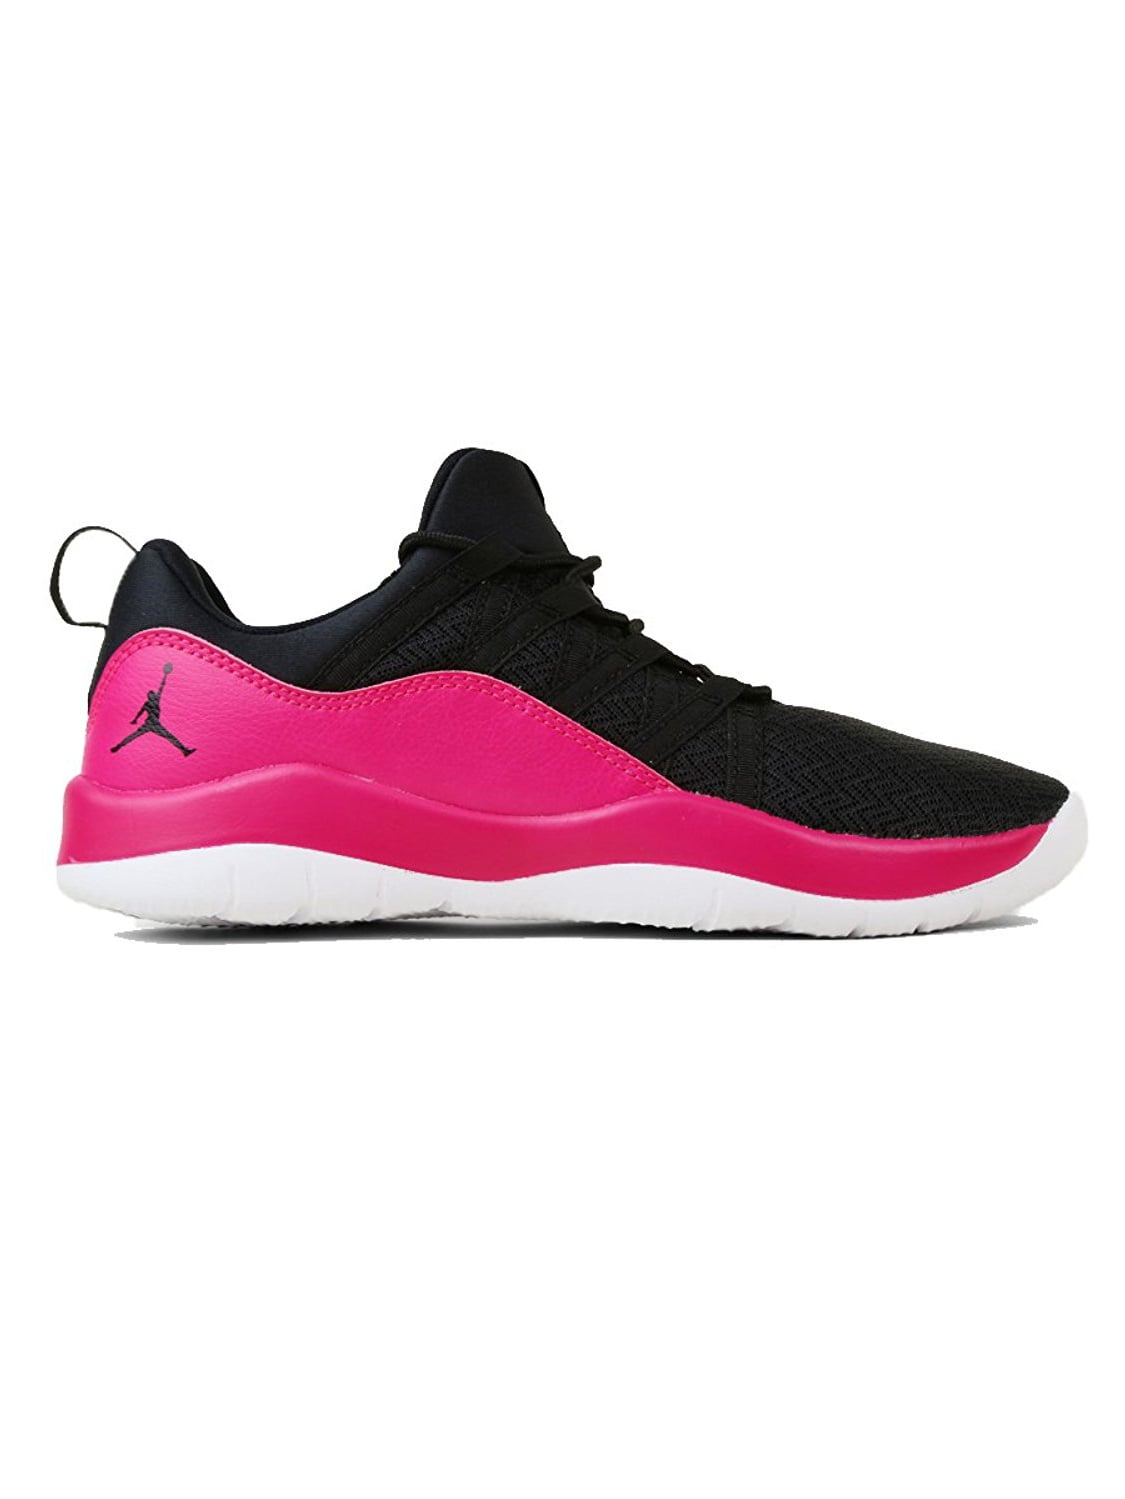 Jordan DECA FLY Girls sneakers - Walmart.com